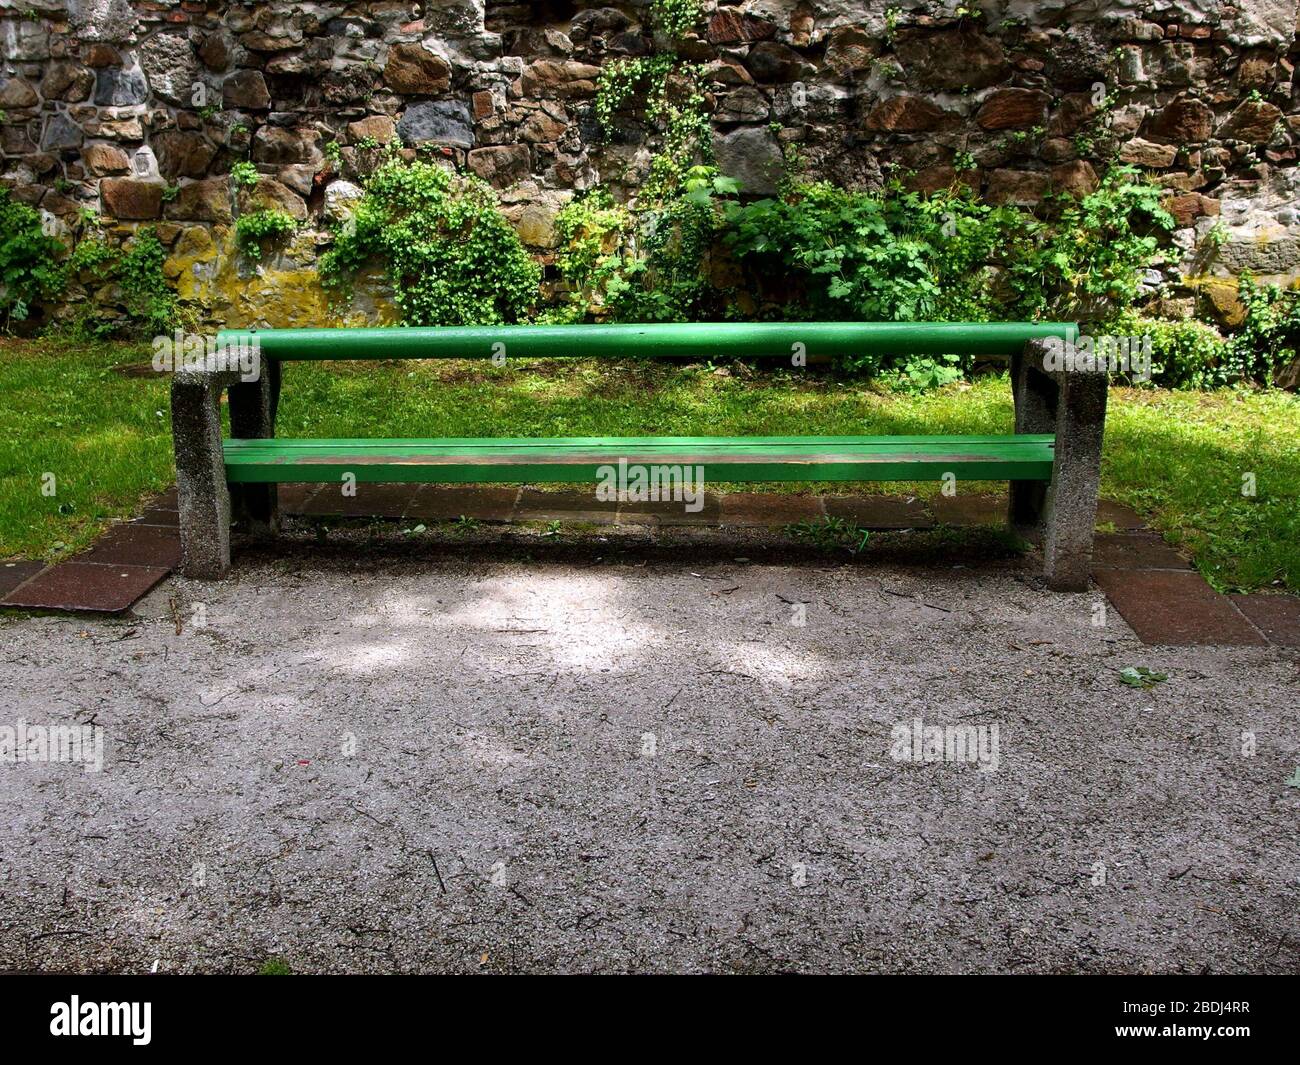 English: Plečnik bench, designed by J. Plečnik (d. 1957).Slovenščina:  Plečnikova klop, oblikoval J. Plečnik (u. 1957).; 29 May 2013, 14:16:23;  Own work; Mark Ahsmann Stock Photo - Alamy